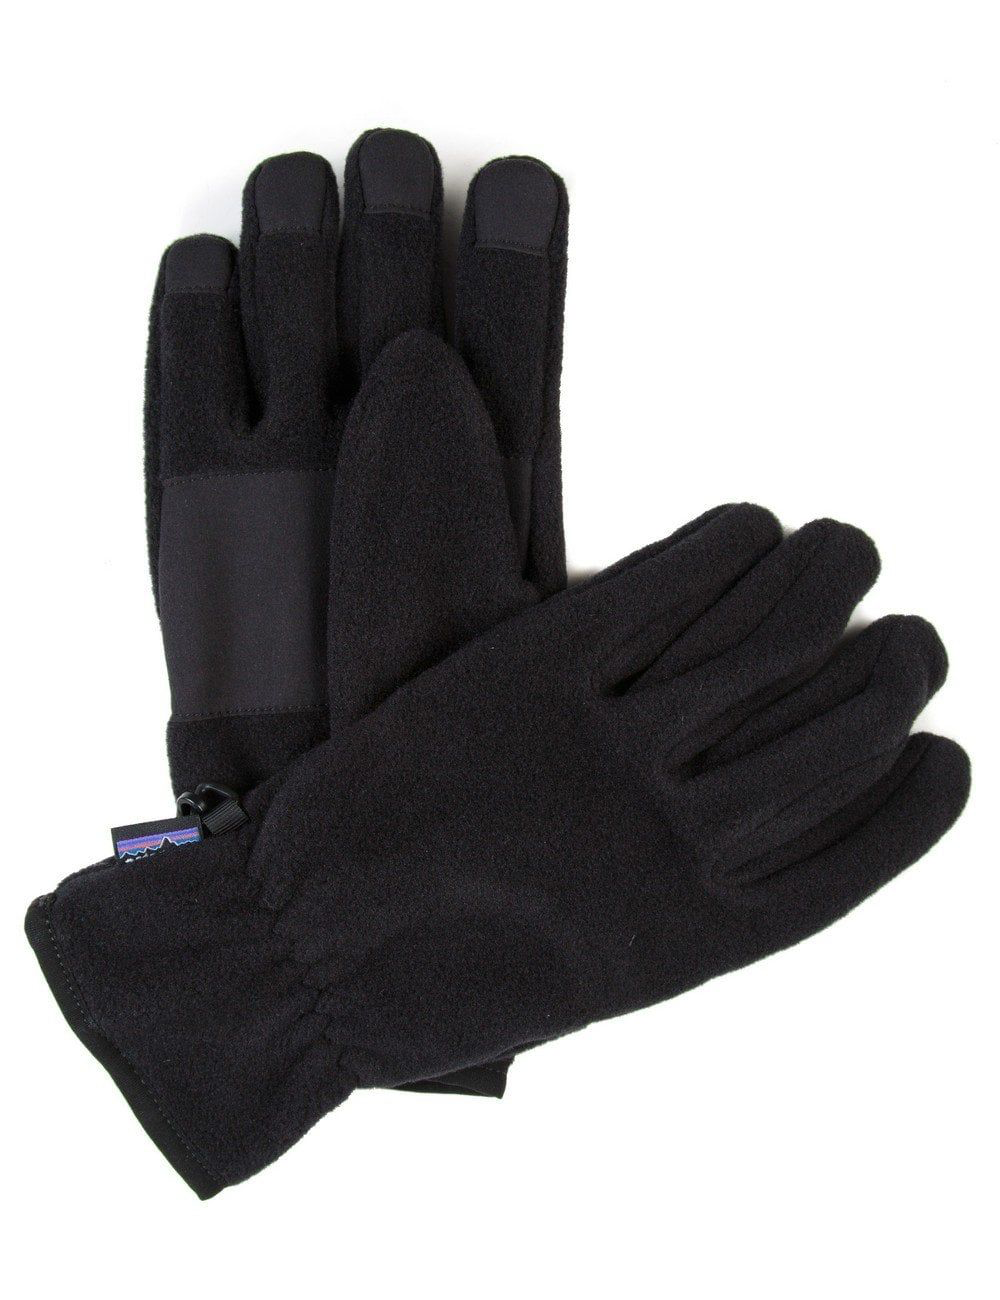 Patagonia Synchilla Fleece Gloves - Black - Medium